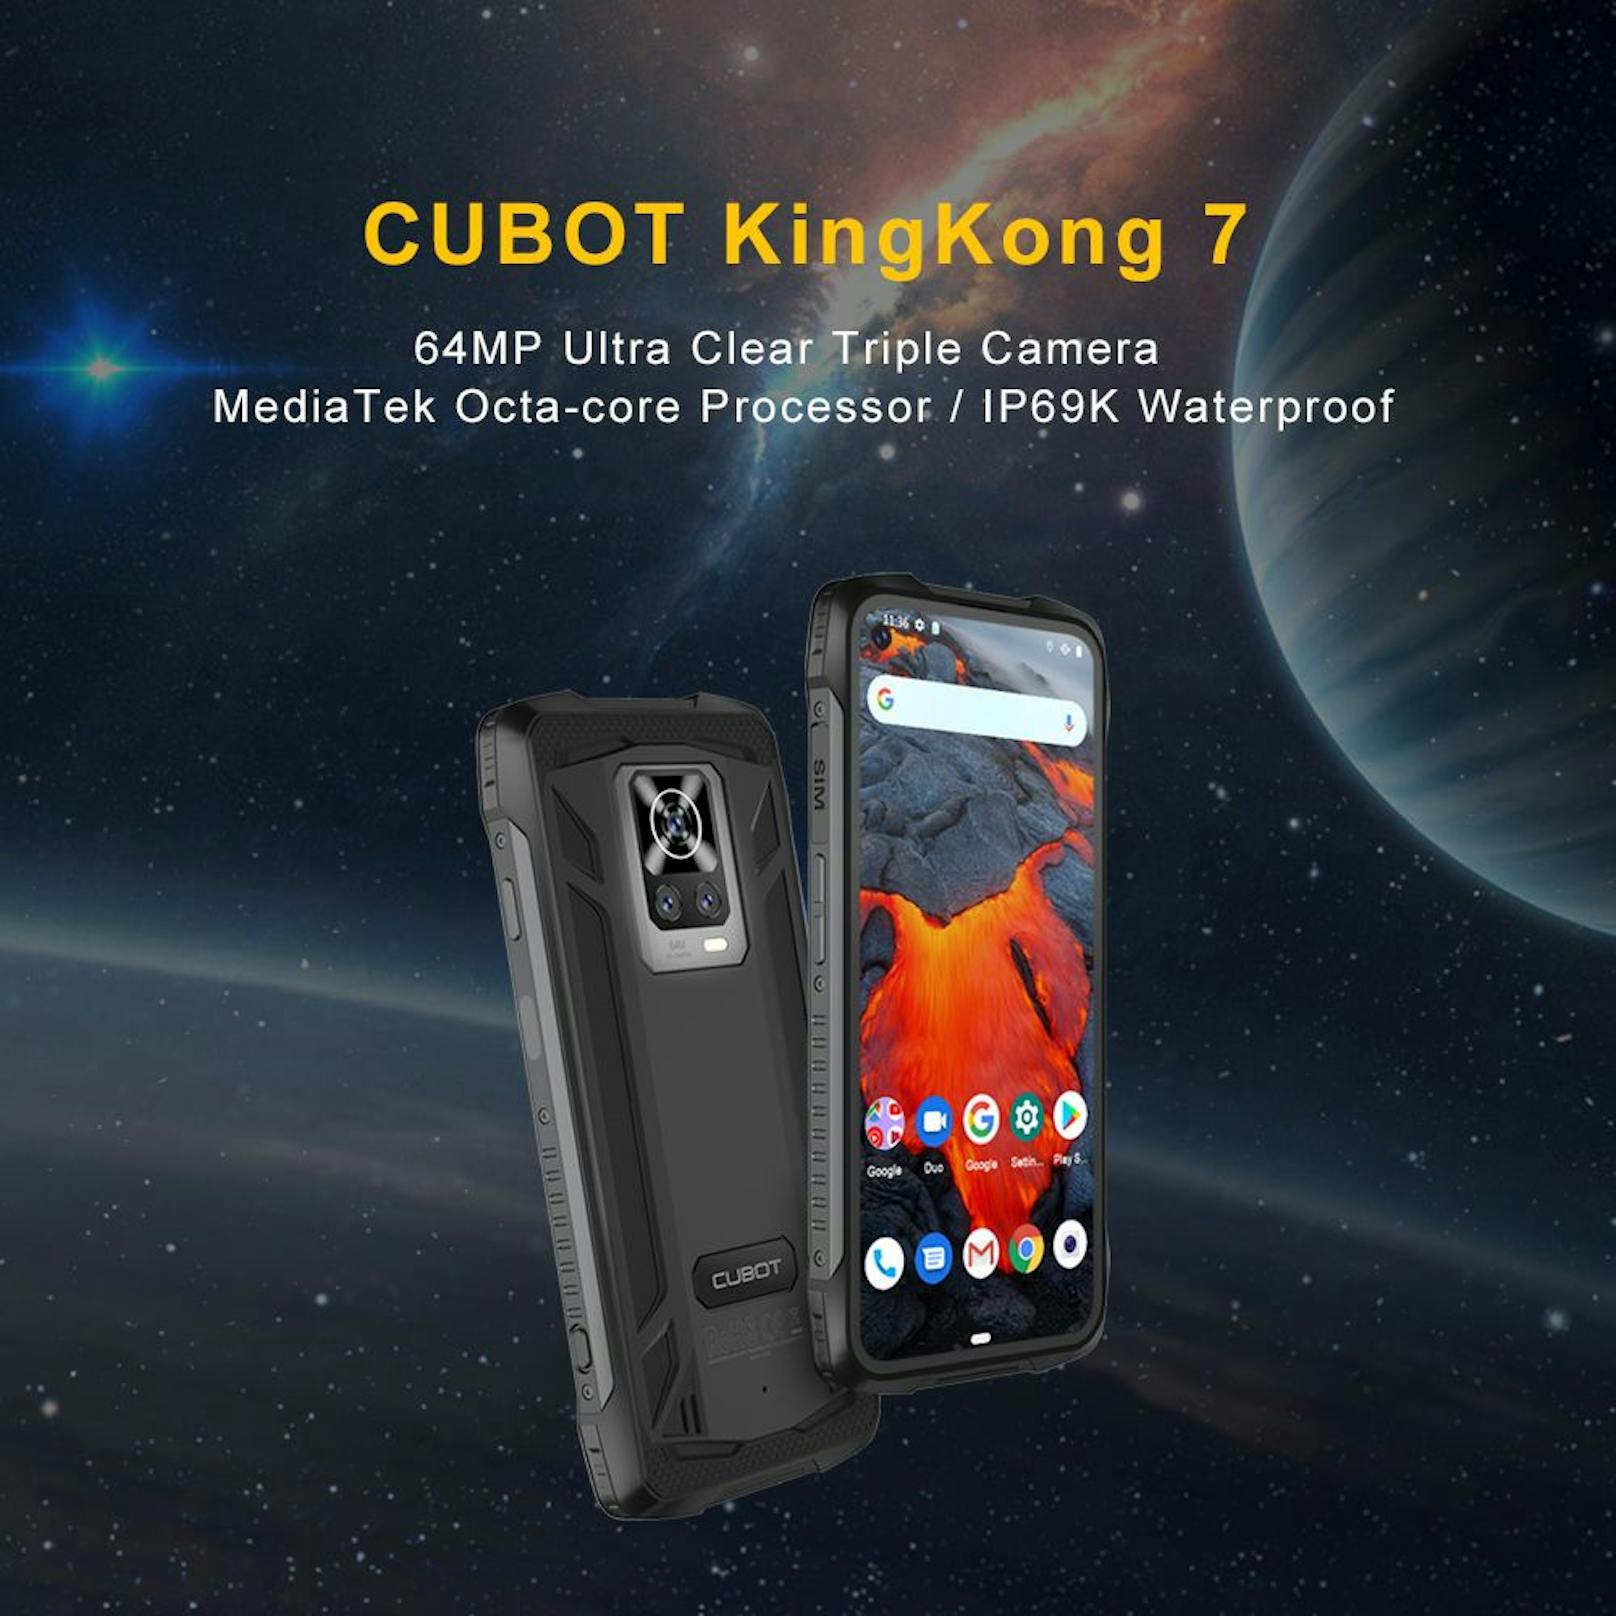 CUBOT KingKong 7